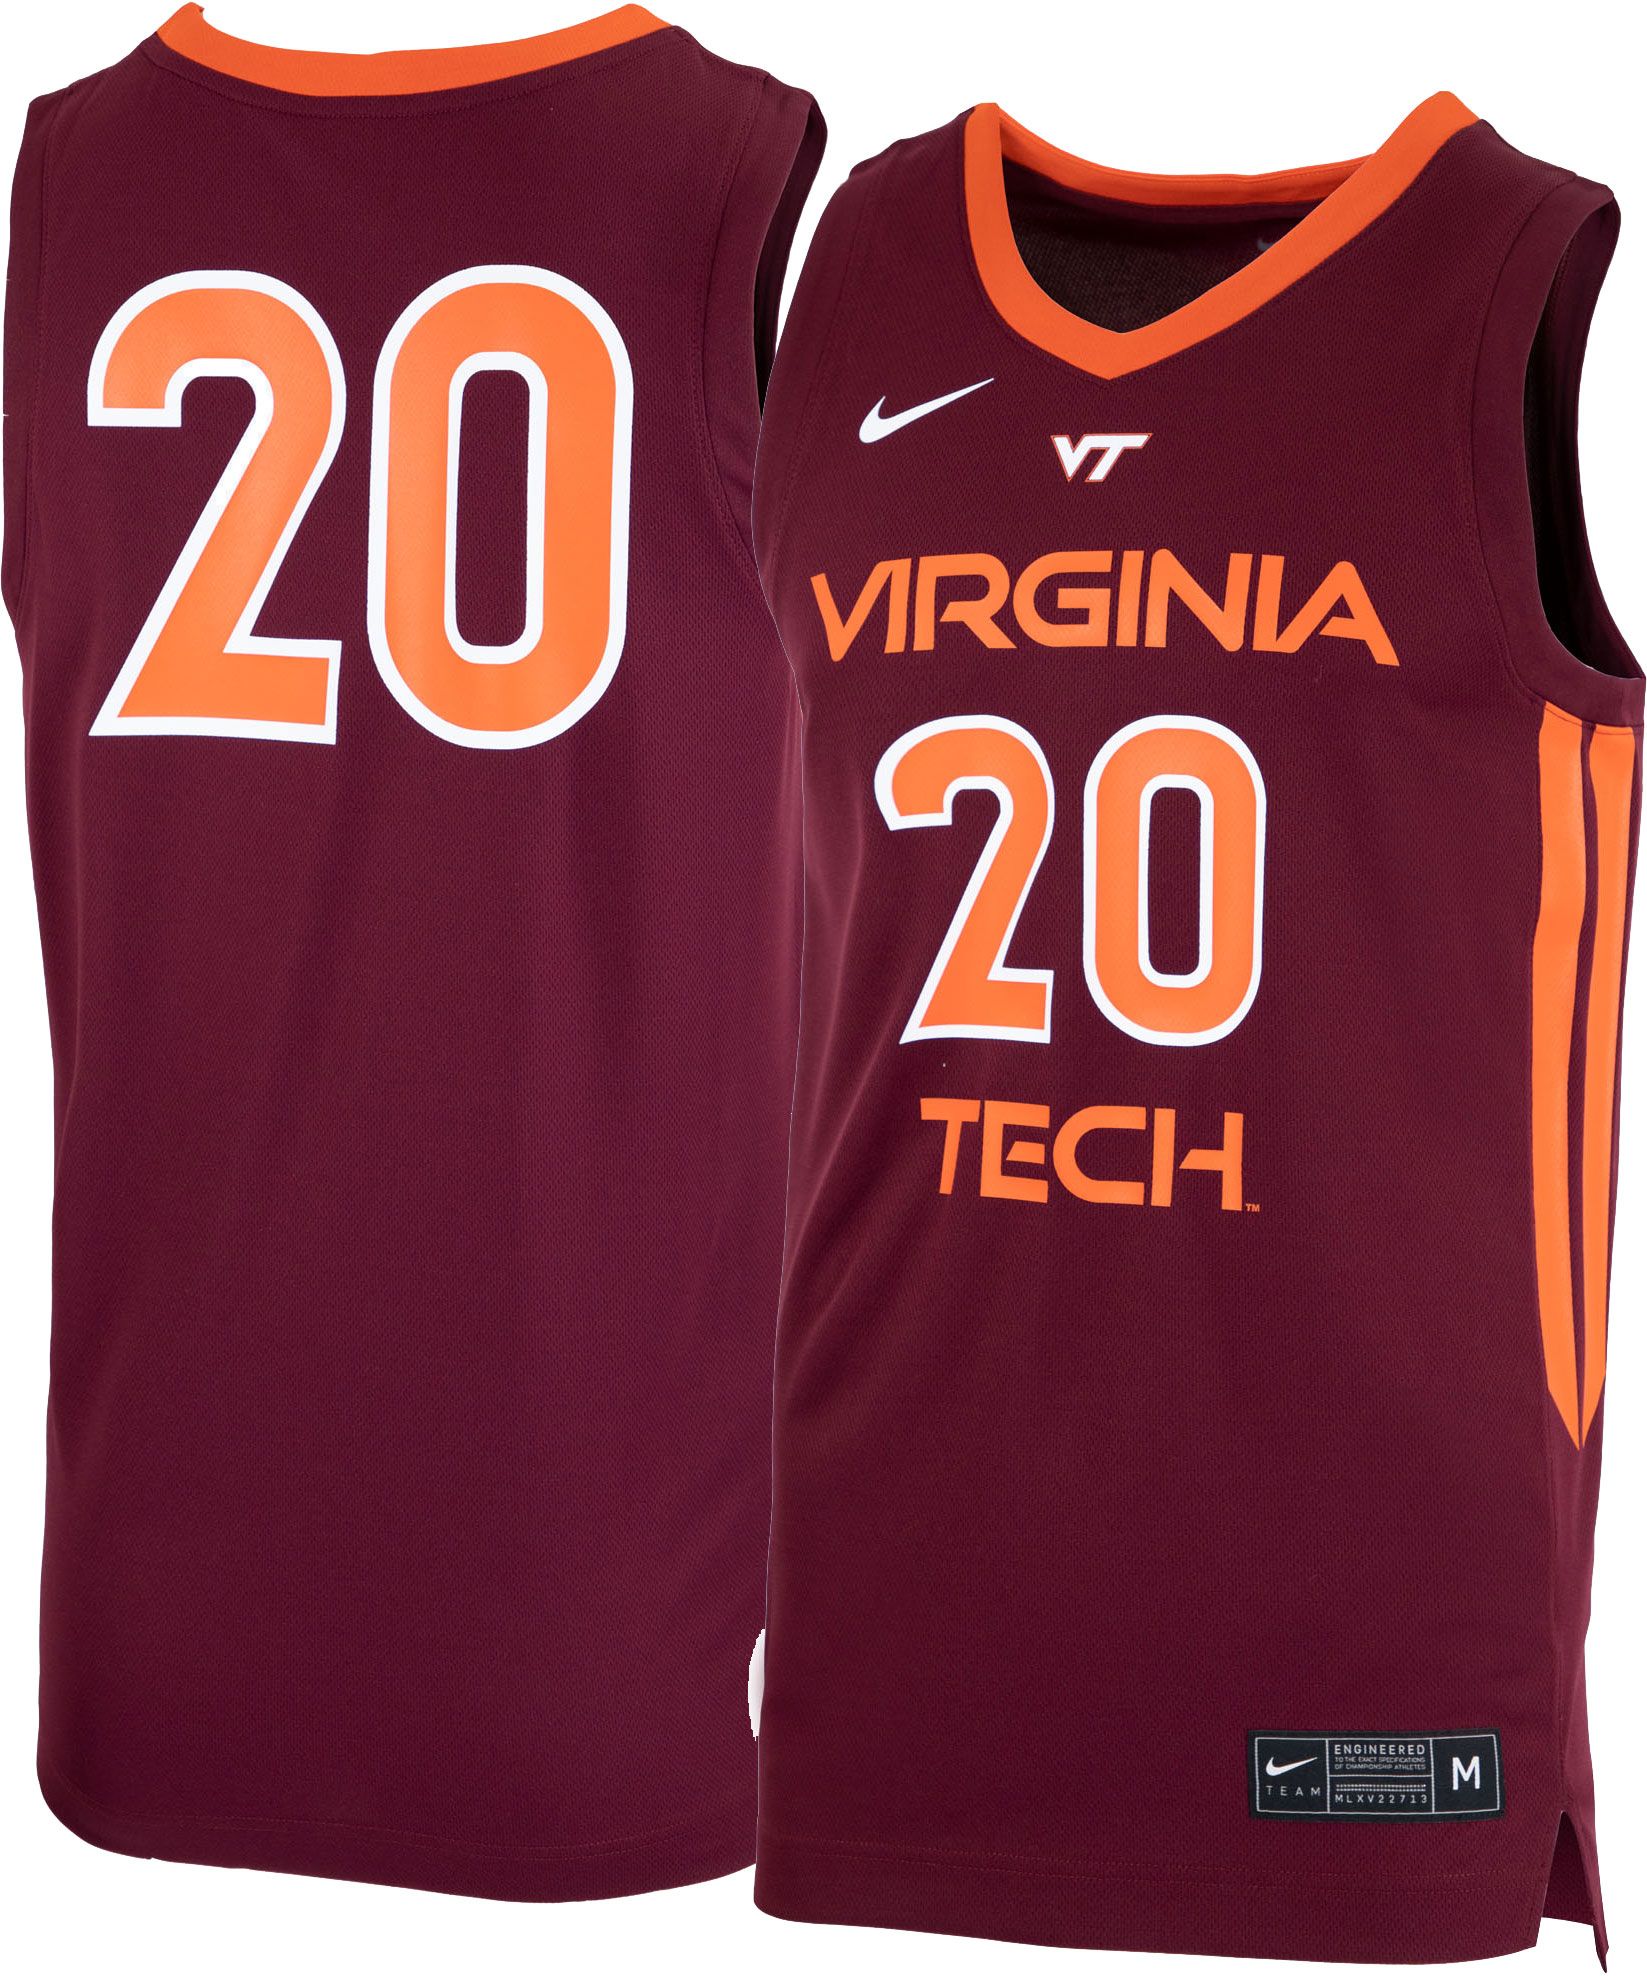 virginia tech basketball jersey